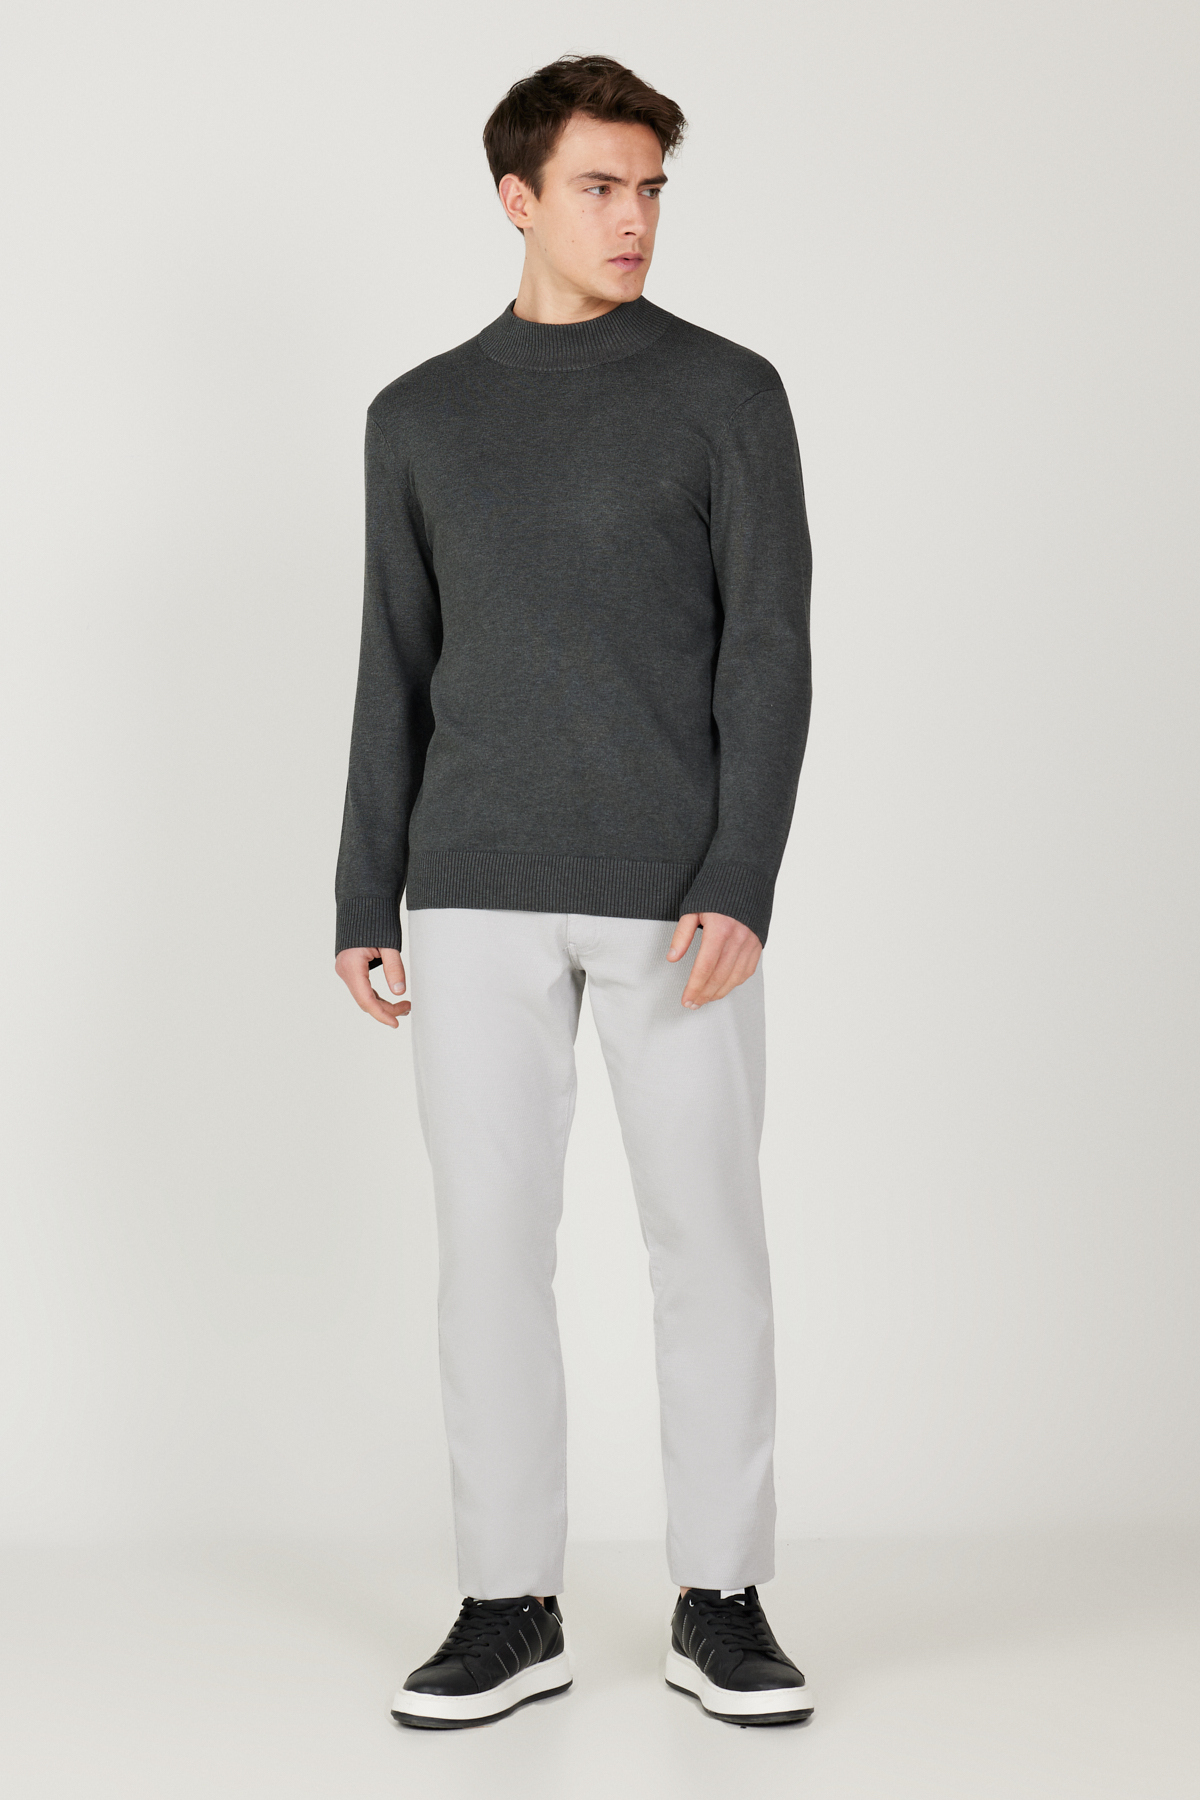 Levně ALTINYILDIZ CLASSICS Men's Anthracite-Melange Standard Fit Normal Cut Half Turtleneck Knitwear Sweater